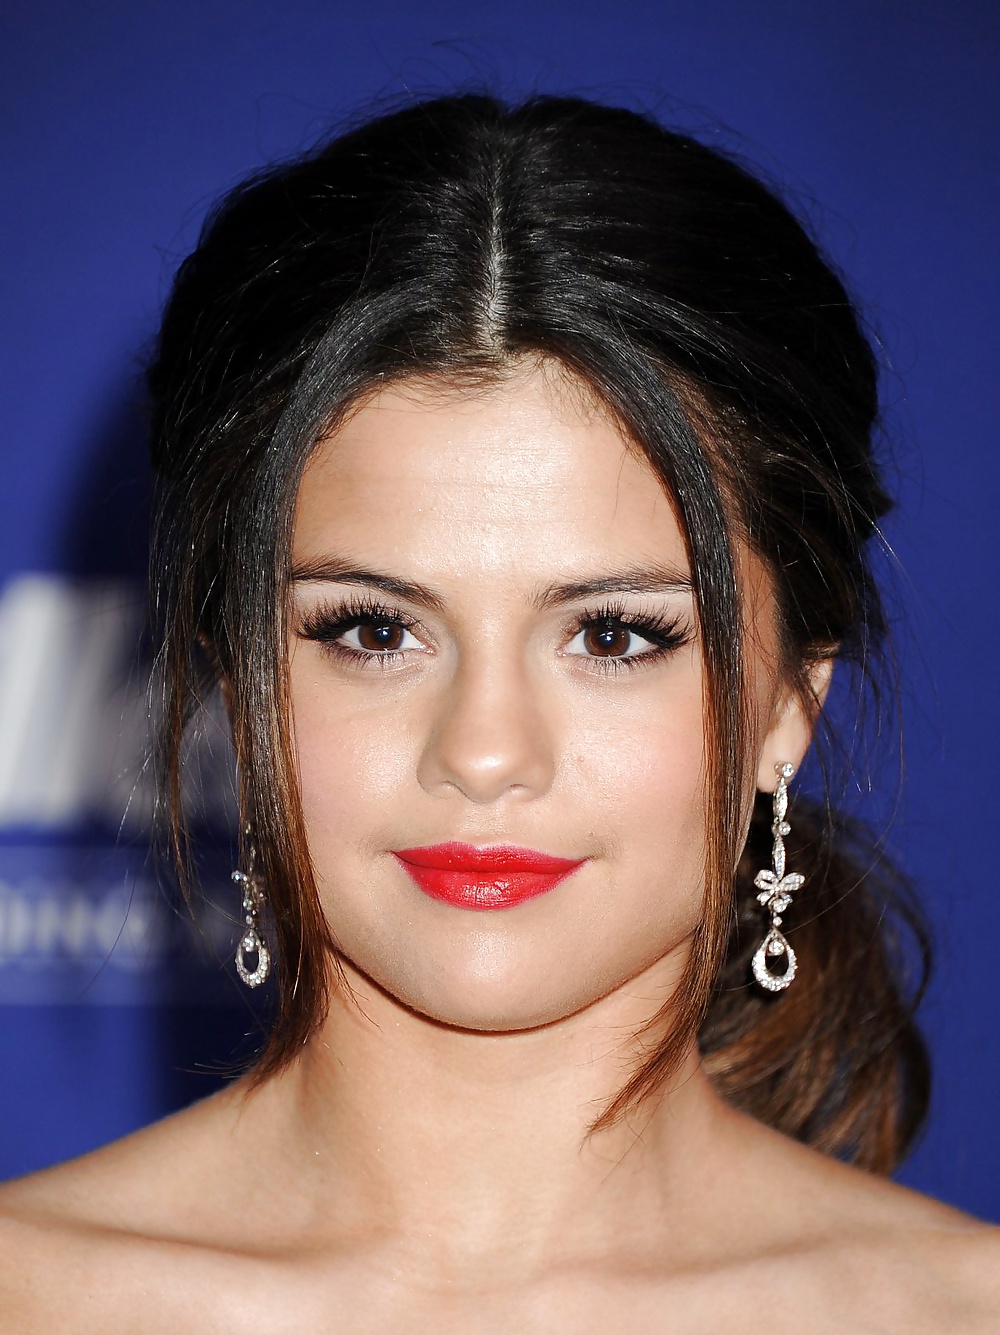 Selena Gomez - Celeb Le Plus Chaud Baiser 2014 #25823114